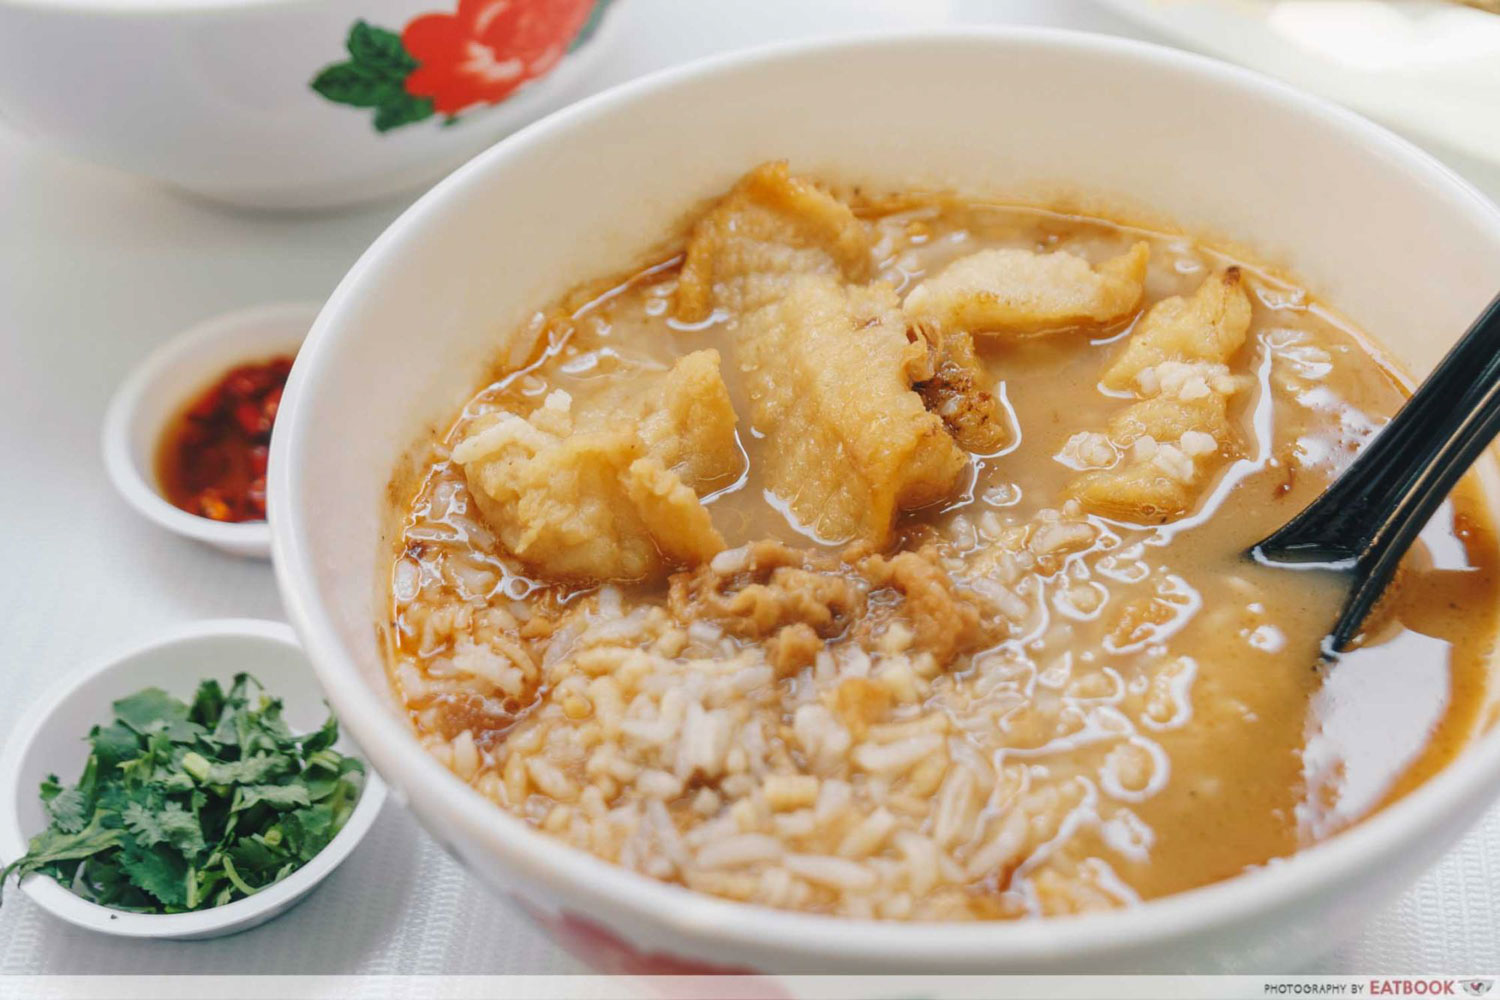 Chao Ting - Fried Fish Paofan